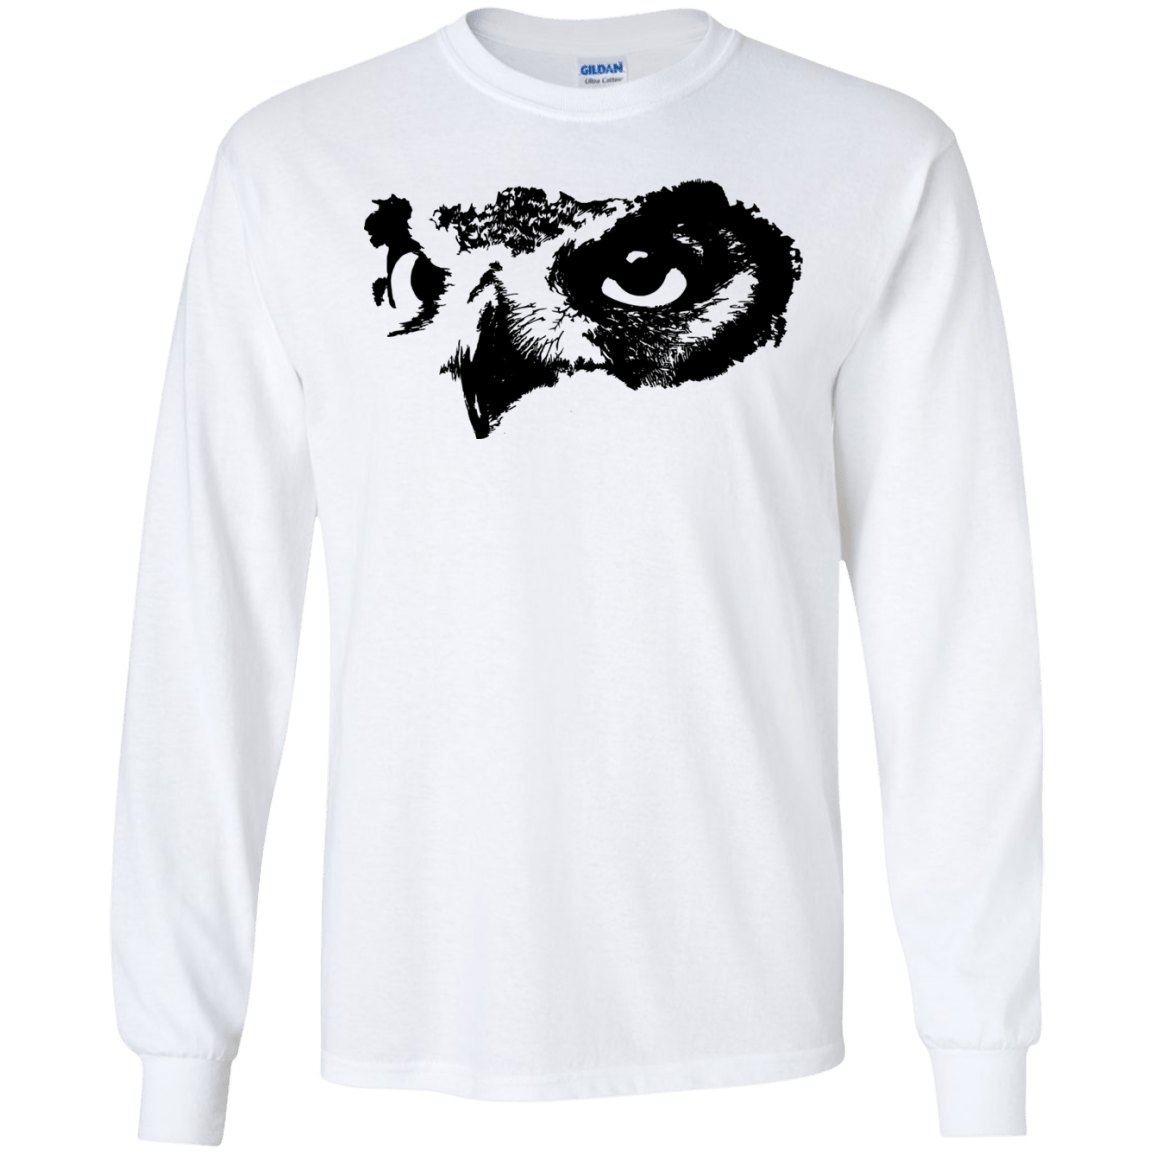 Owl Eyes Men's Long Sleeve T-Shirt